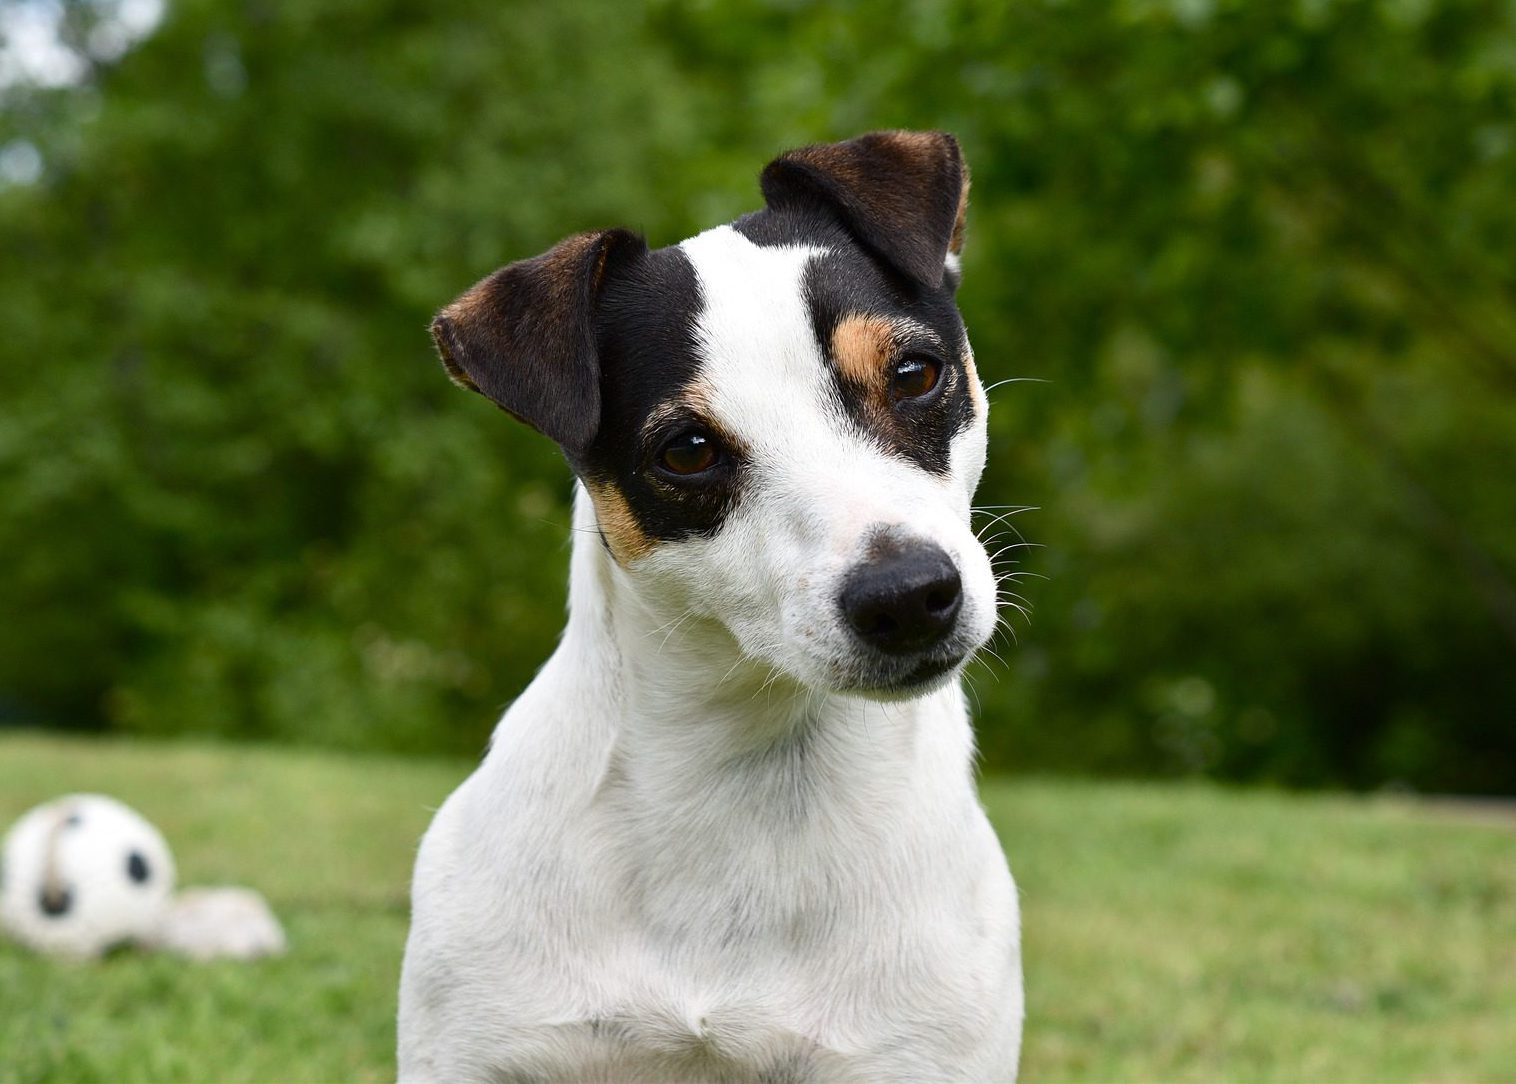 Jack-russell-terrier-udenforVuffeli hundeblog